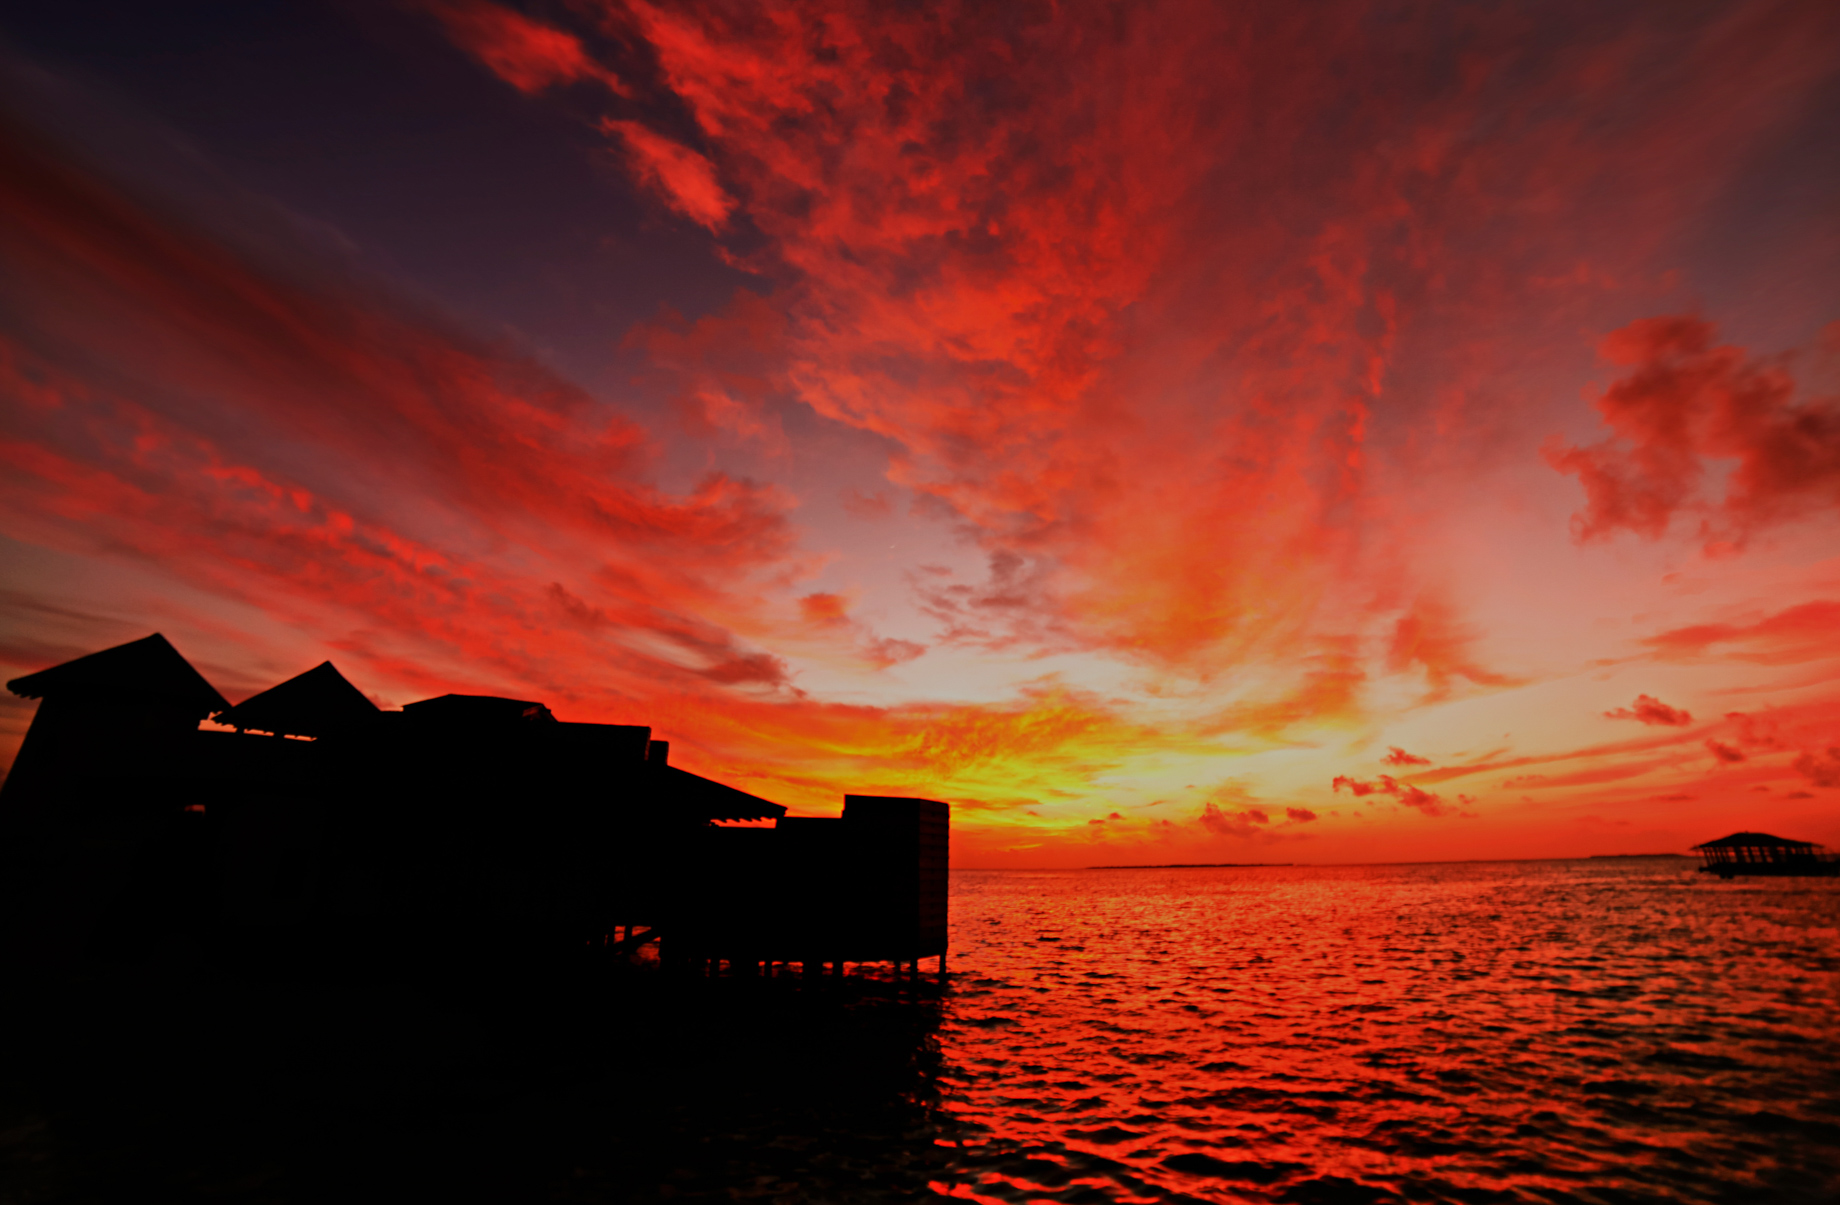 Soneva Jani Resort – Noonu Atoll, Medhufaru, Maldives – Overwater Villa Tropical Sunset